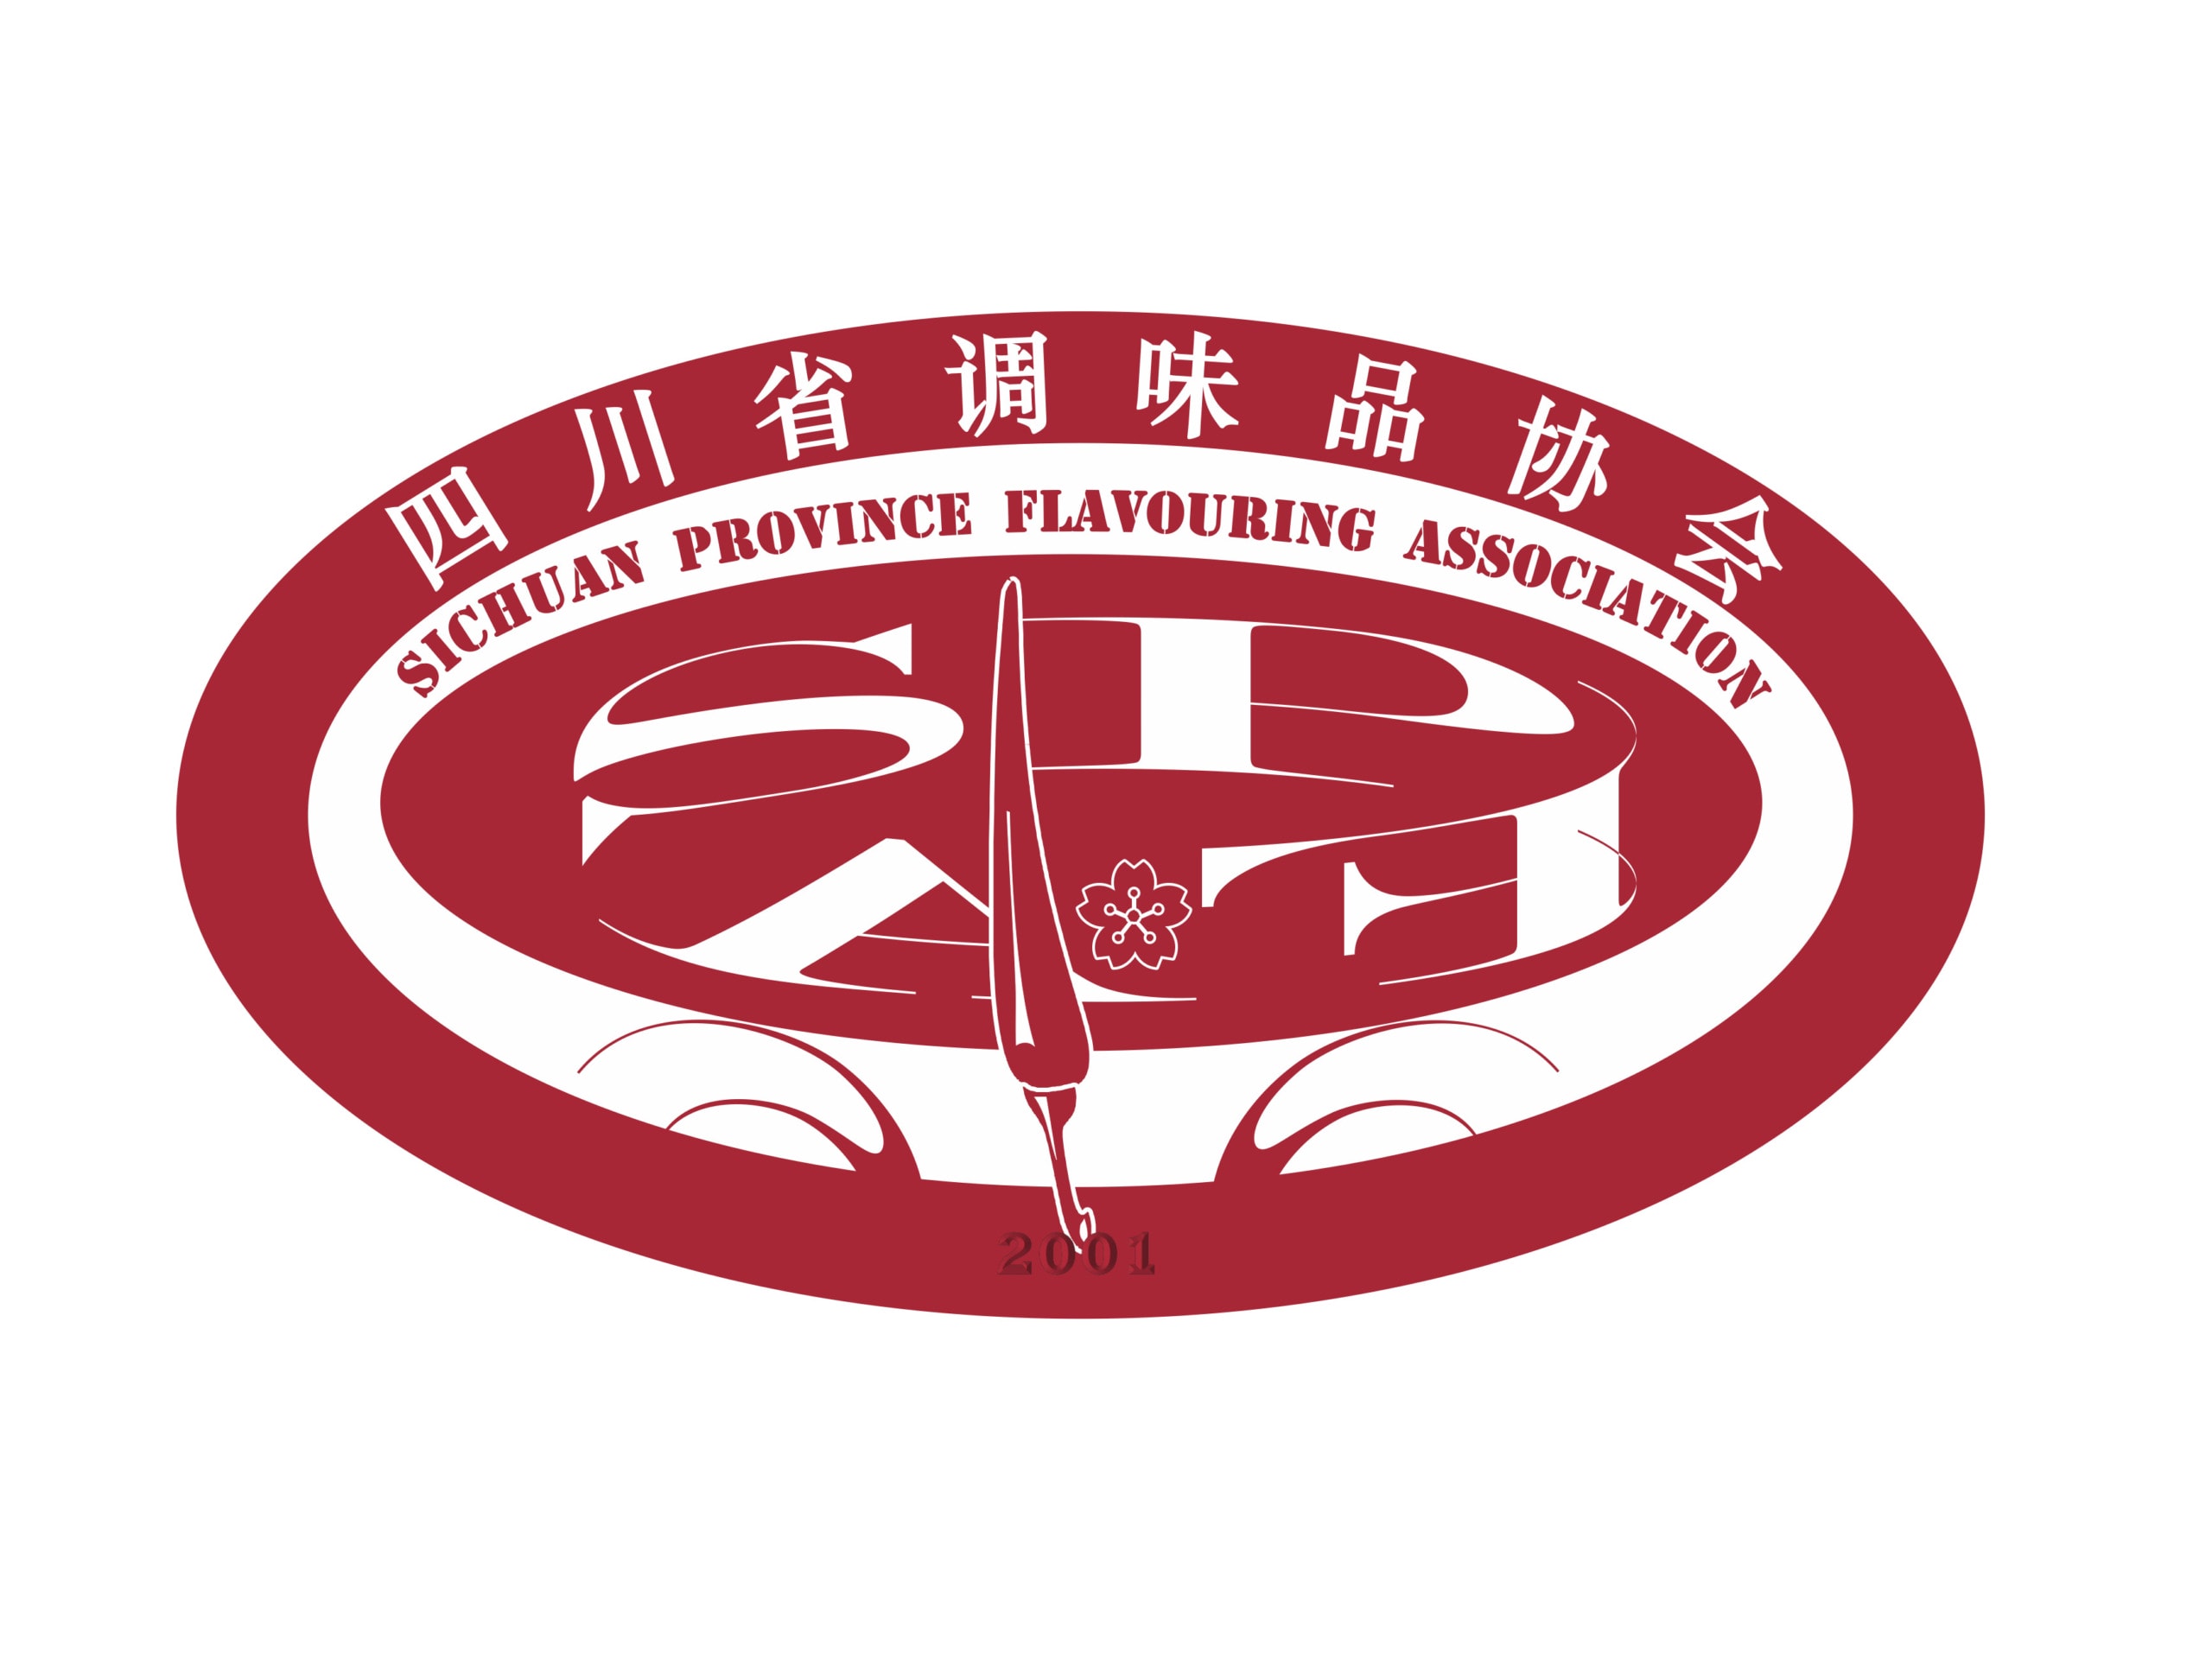 Sichuan Province Flavoring Association